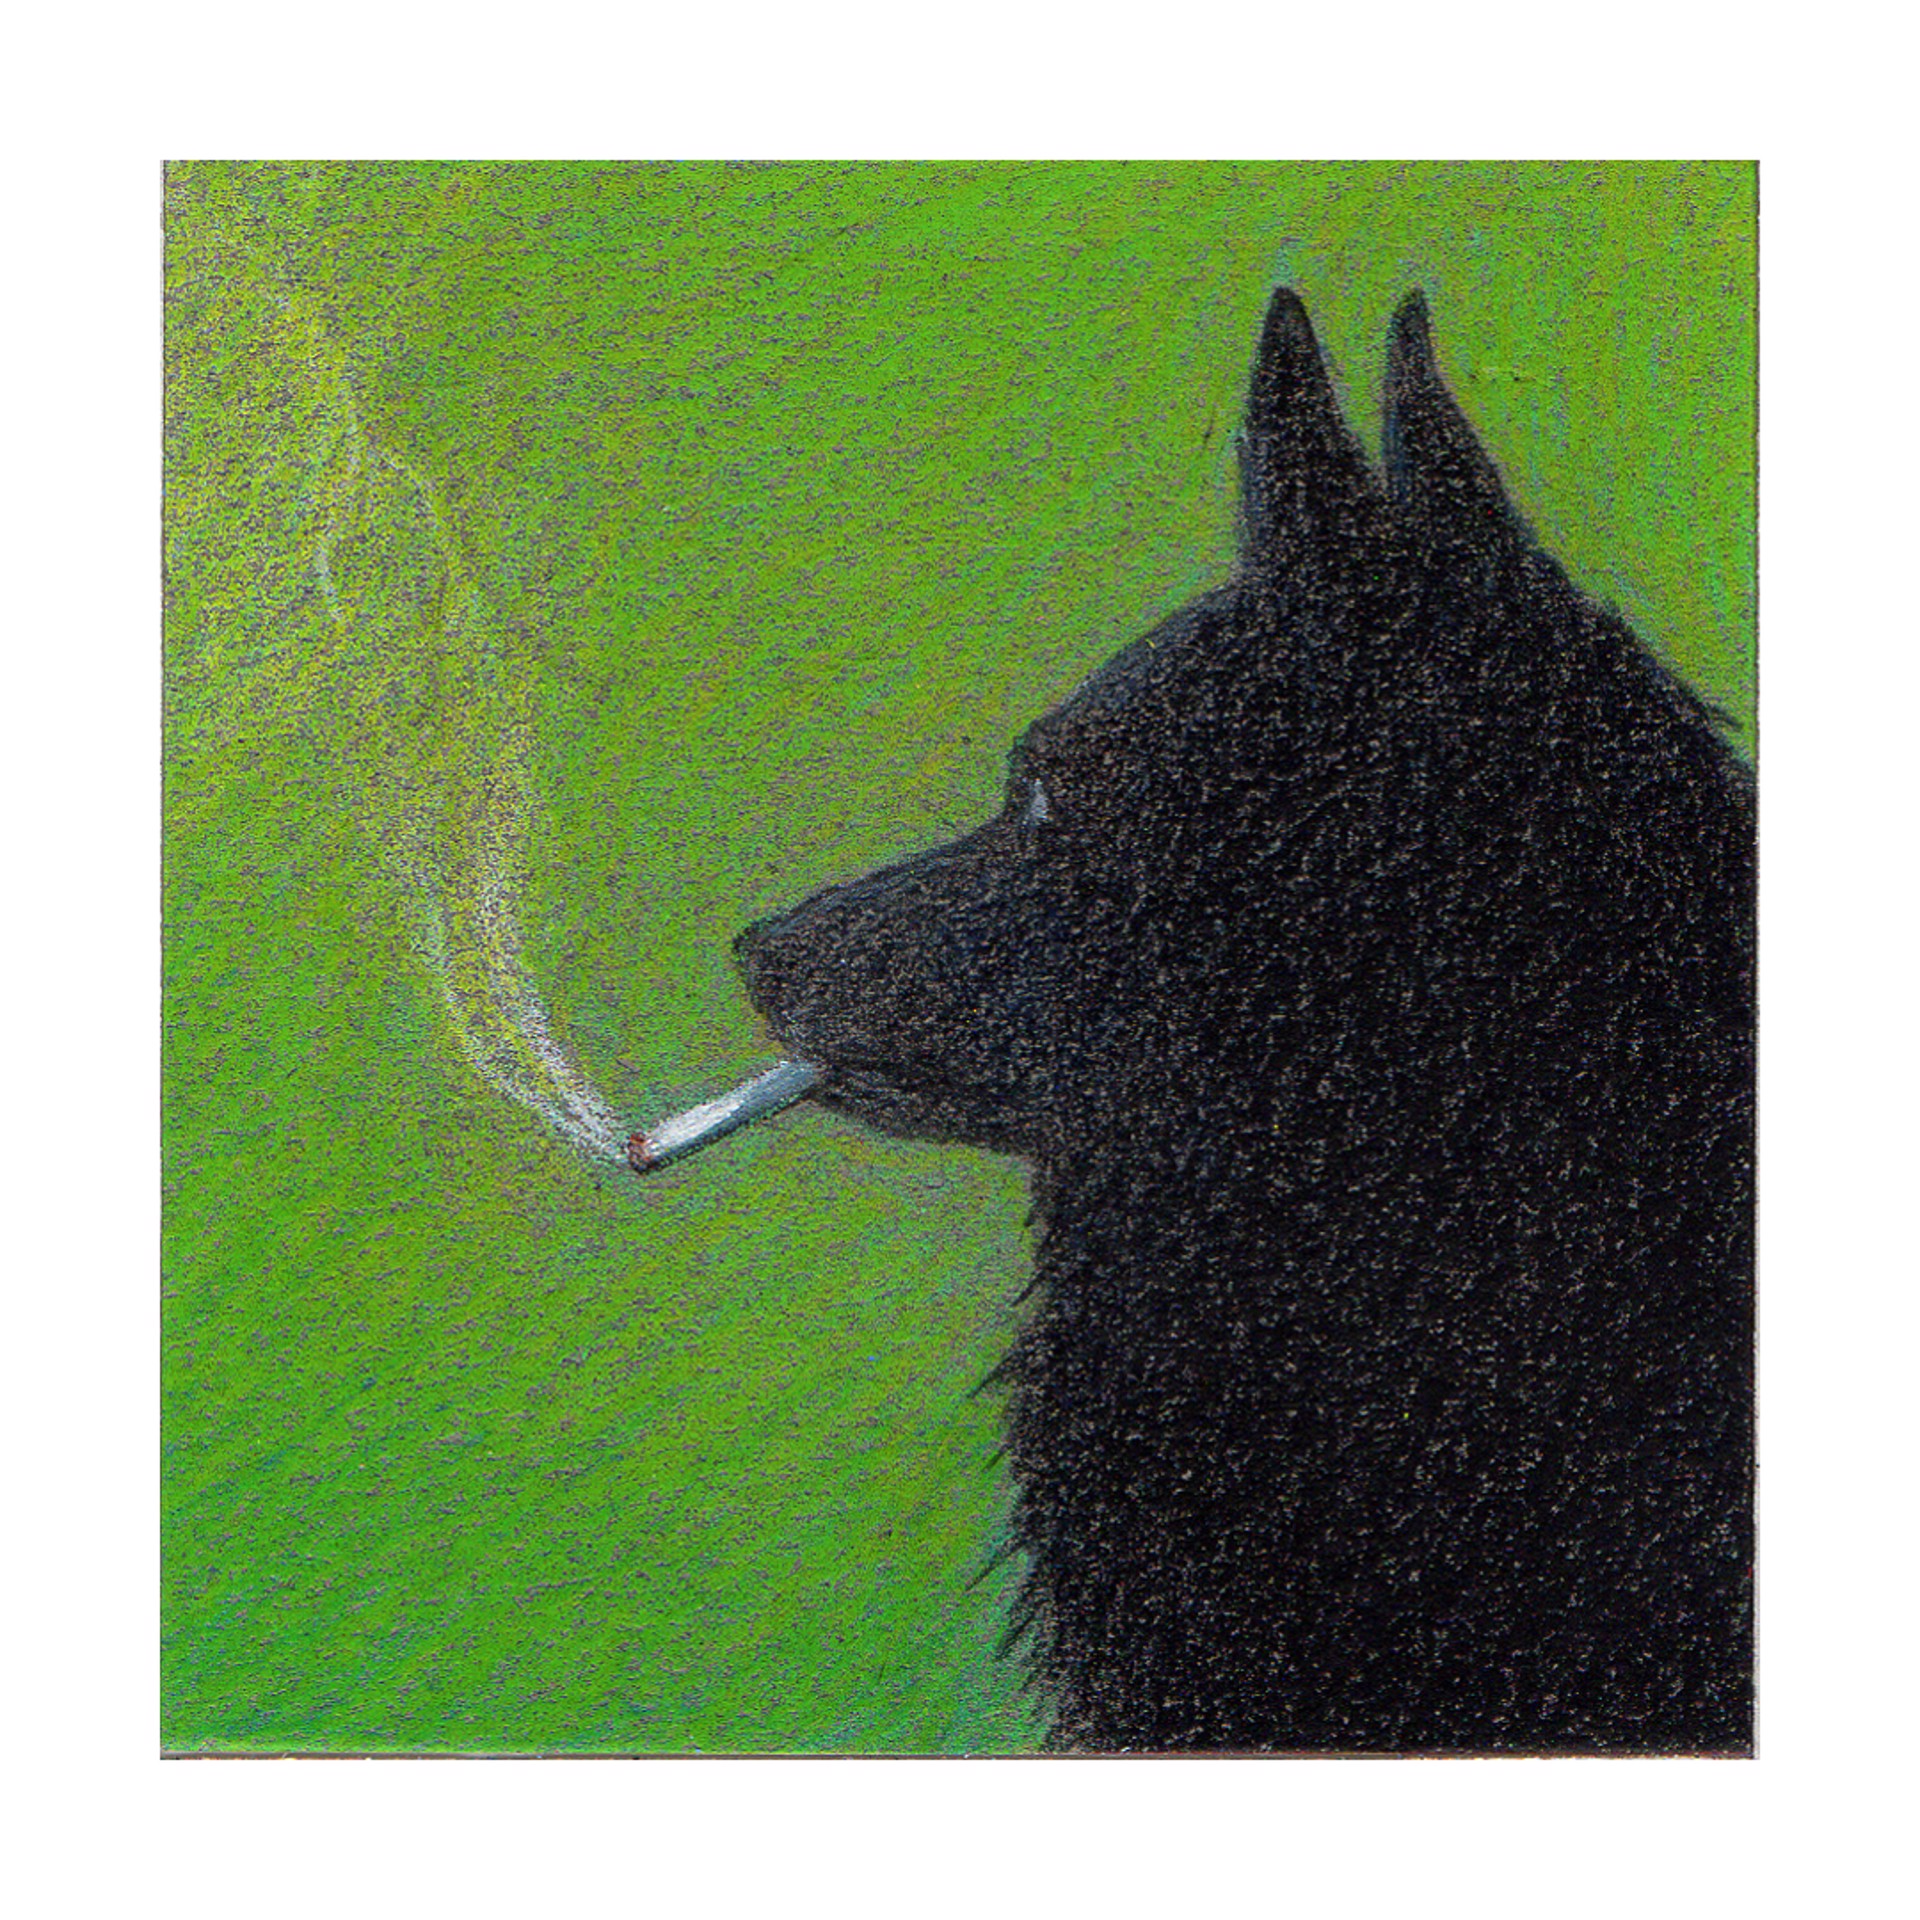 Dog Smoking a Cigarette #1 by Neva Mikulicz